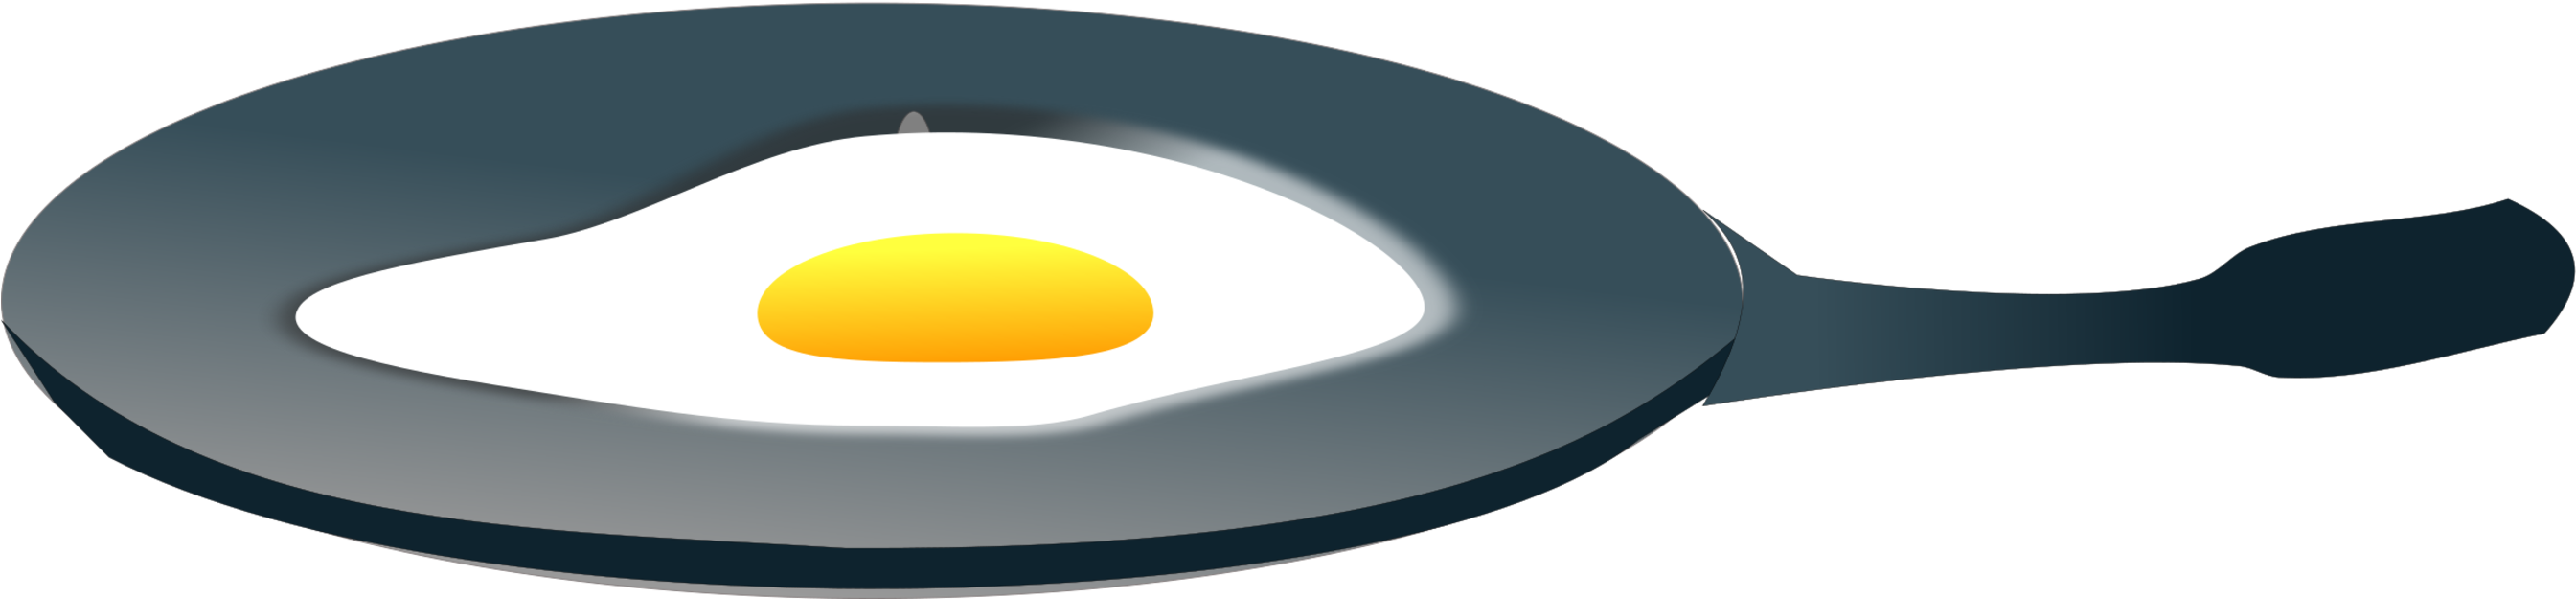 Download PNG image - Pan Fried Egg PNG Photos 